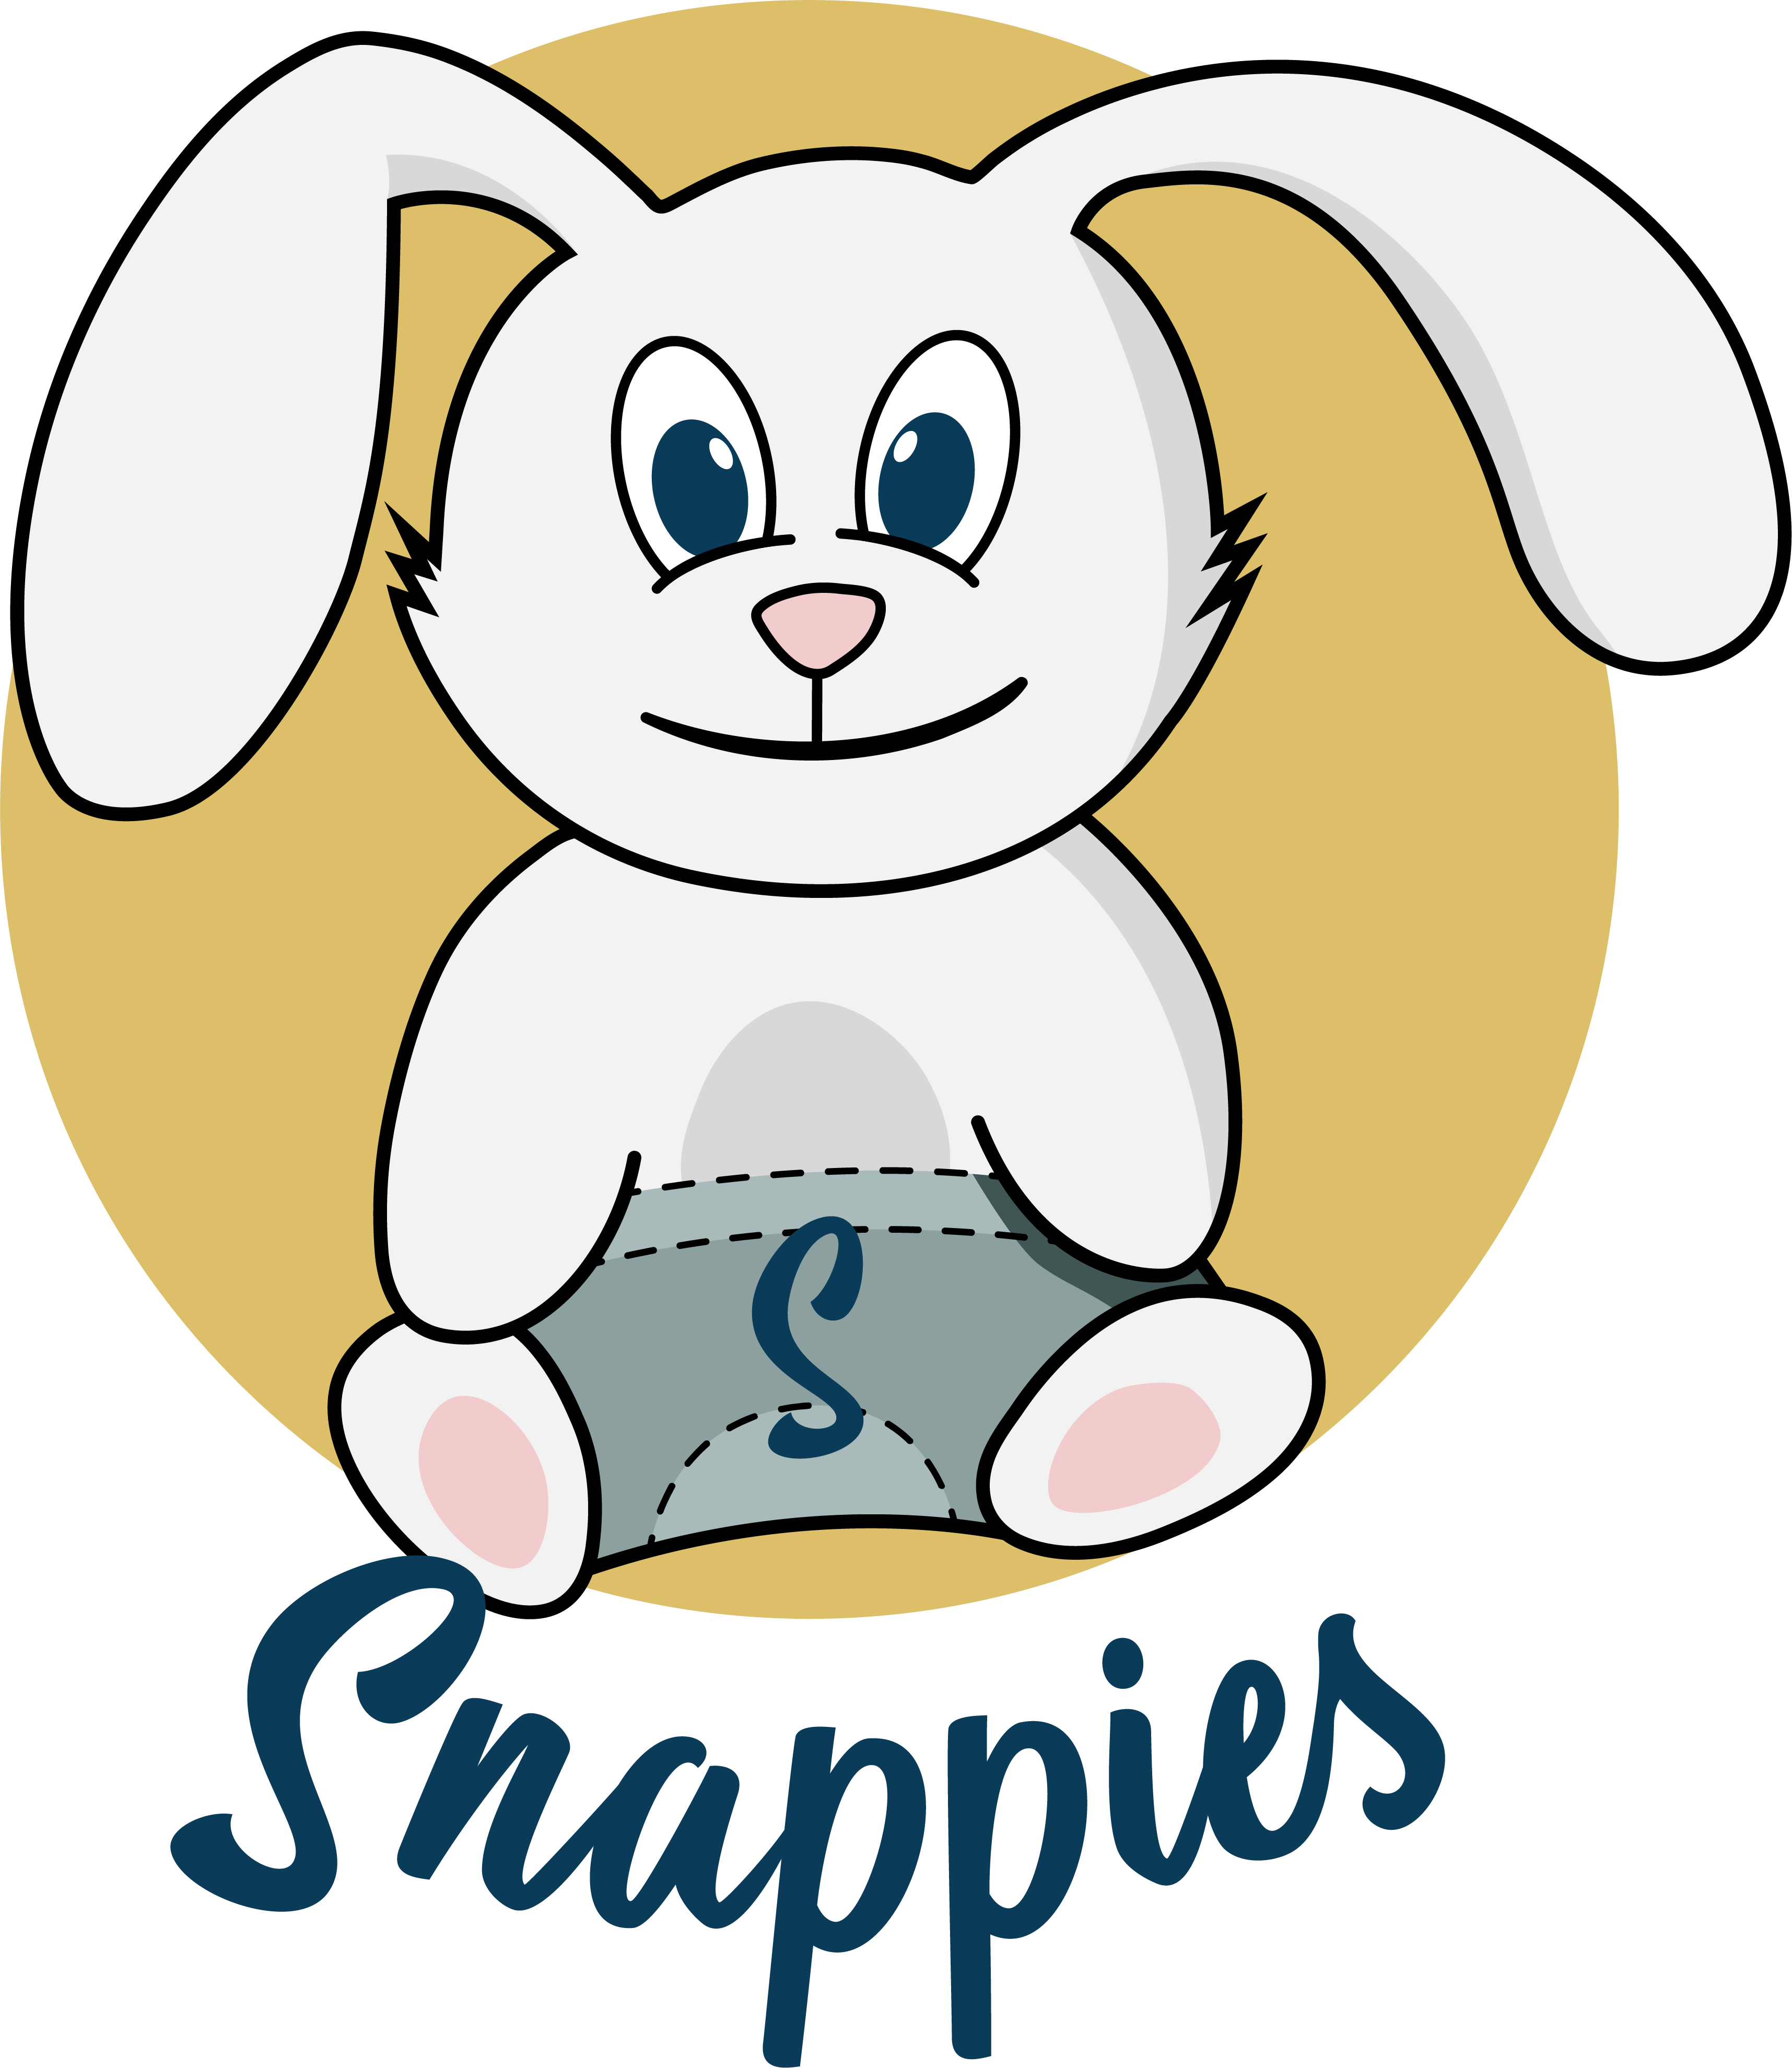 Snappies – Snappies